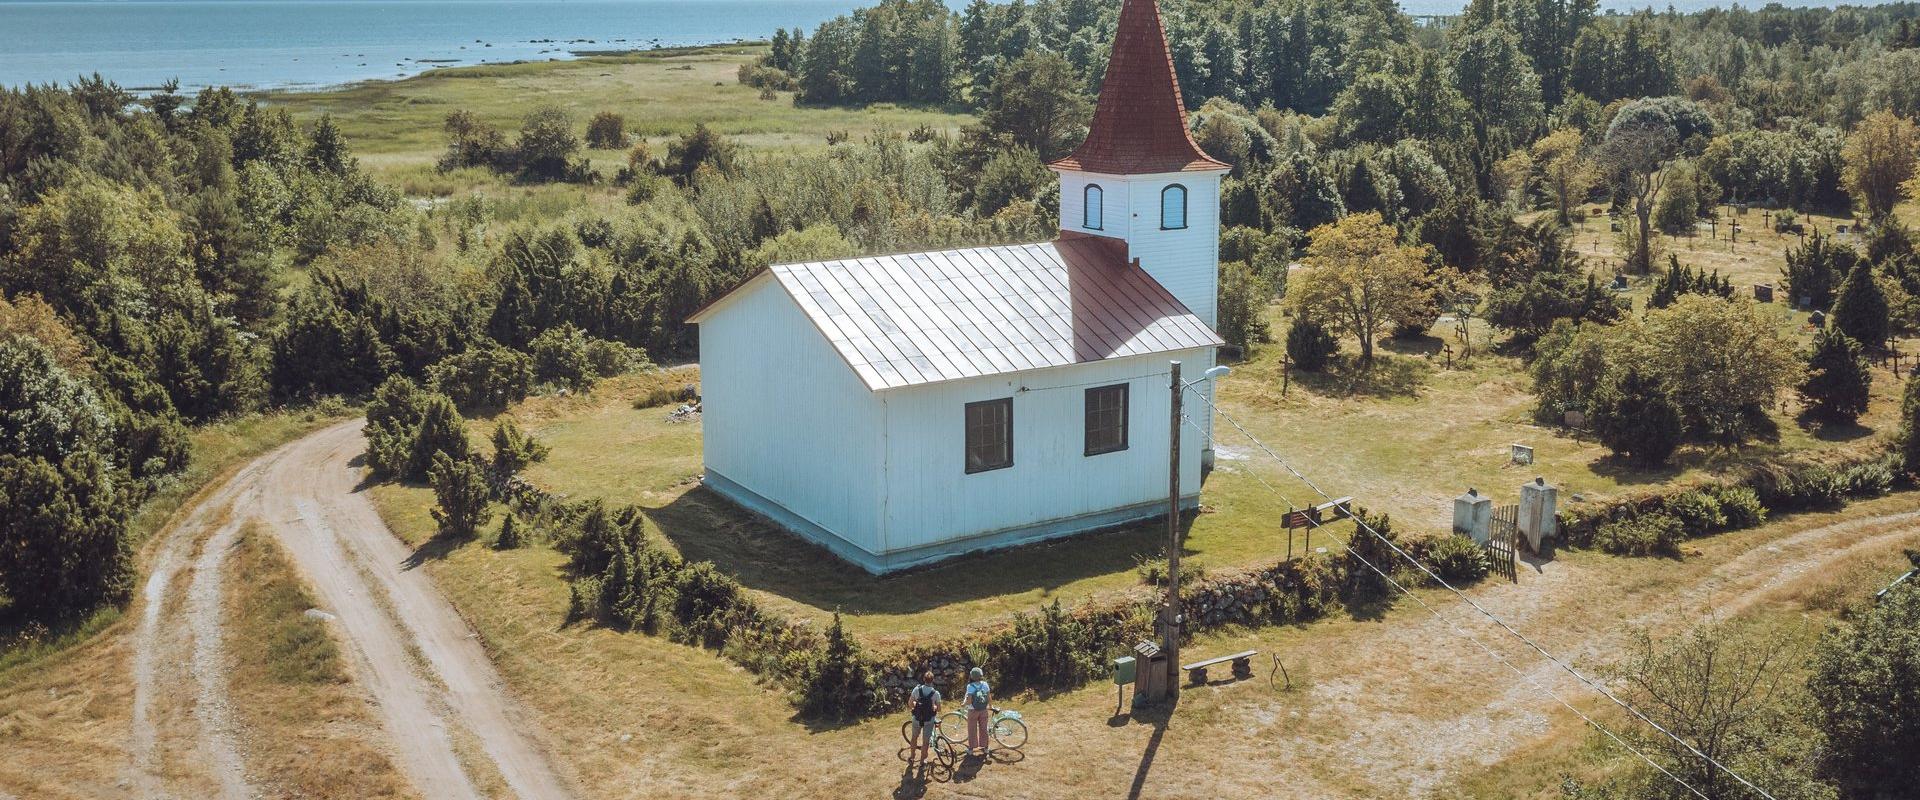 Prangli saare Laurentsiuse kirik